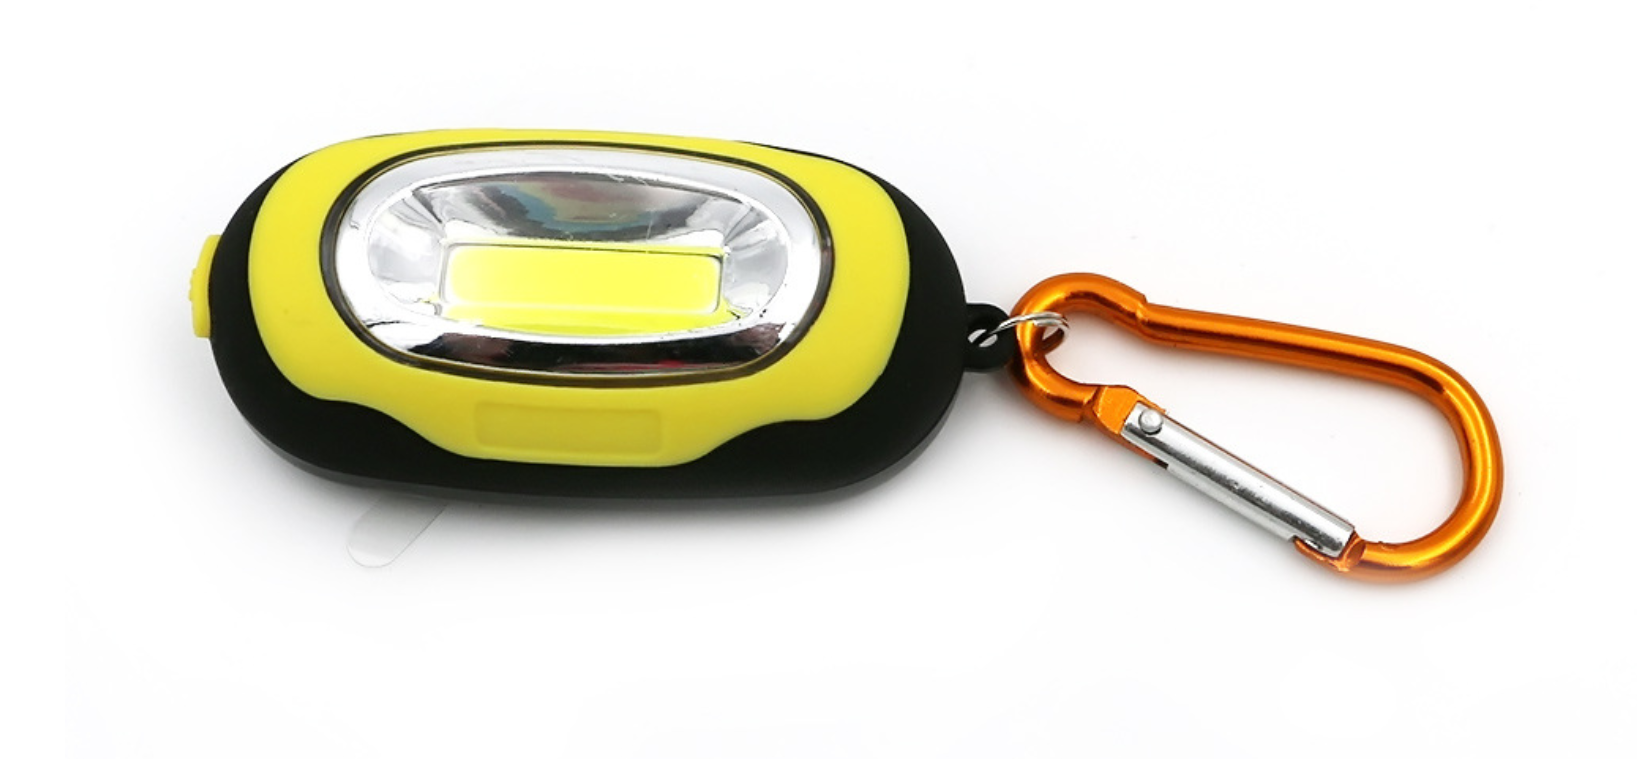 wholesale keychain flashlight, mini torch light keychain, led flashlight keychain wholesale, led keychain flashlight bulk